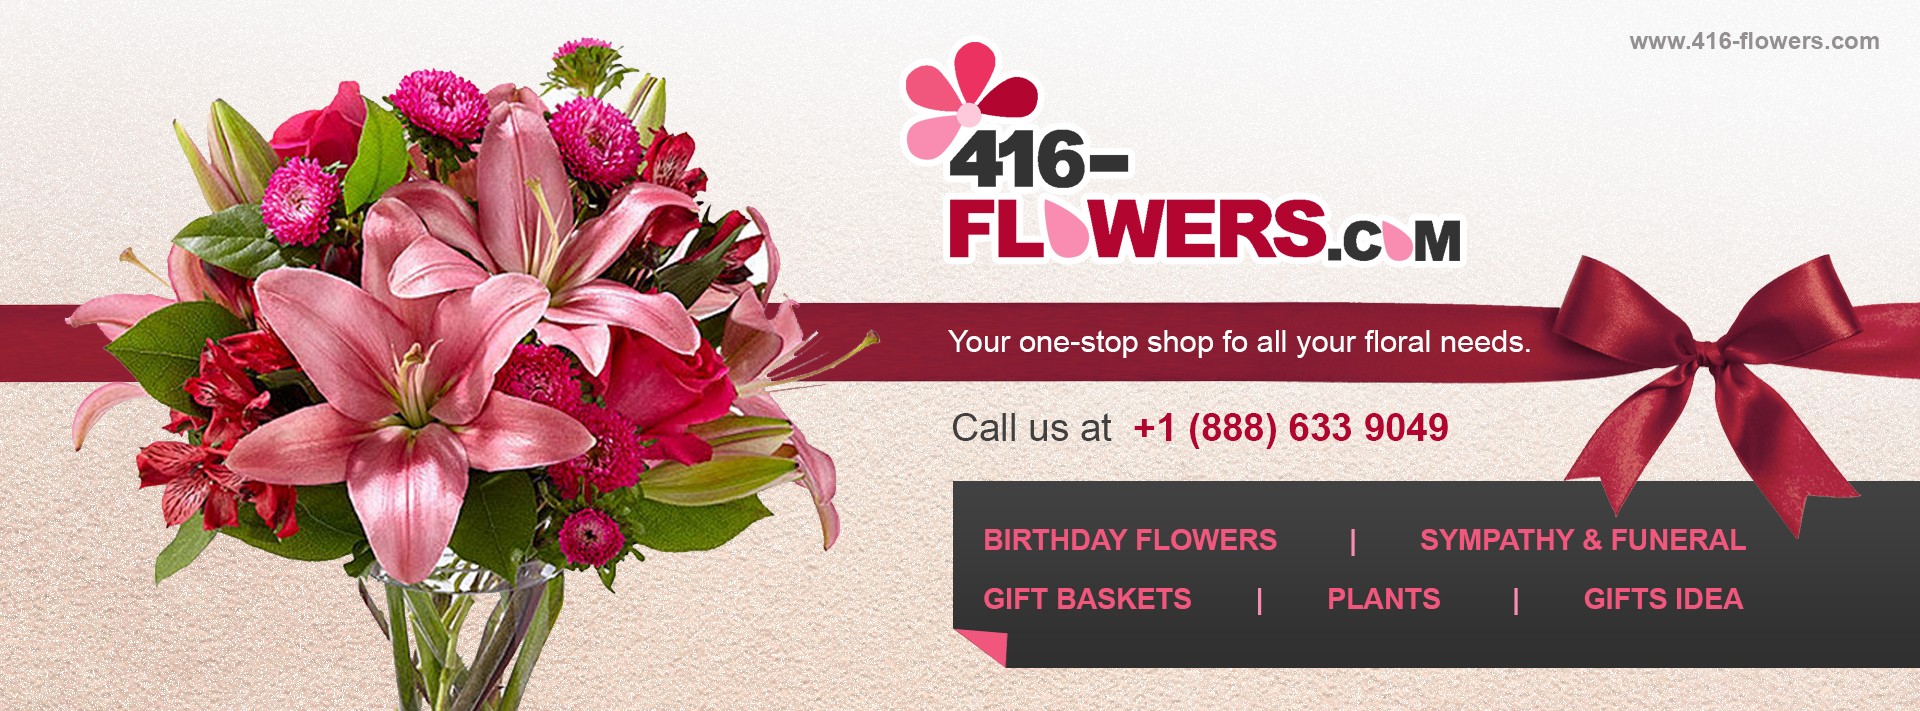 416-flowers